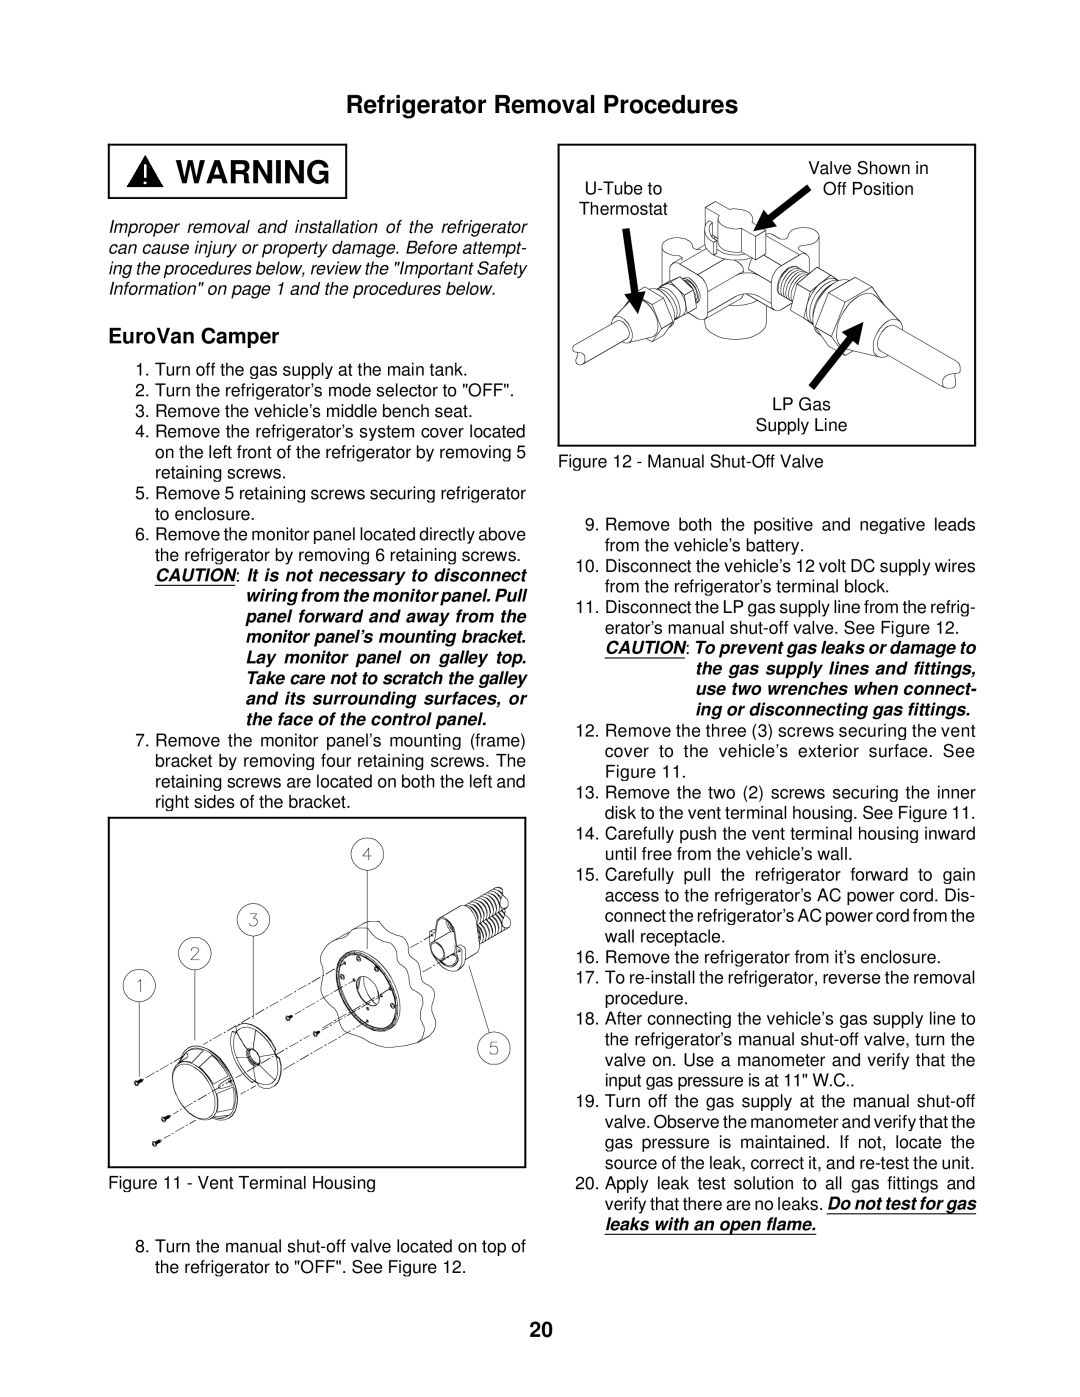 Bryant 3163 service manual Refrigerator Removal Procedures, EuroVan Camper 